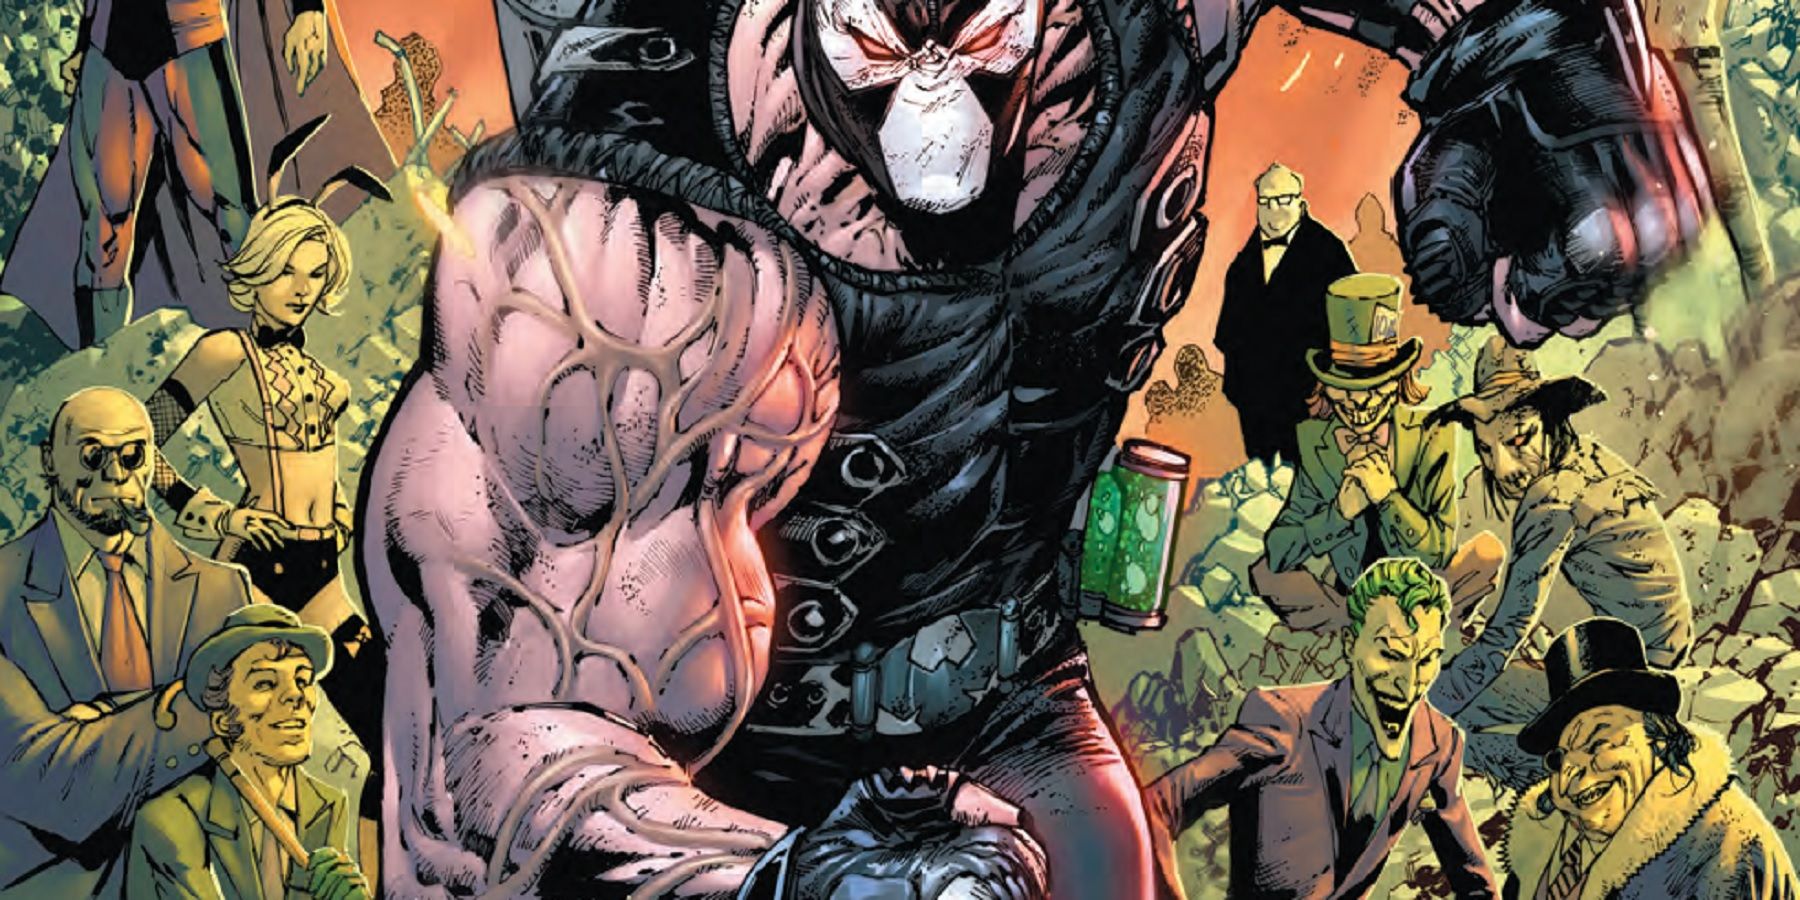 An image of comic art from DC Comics' Batman #75, City of Bane